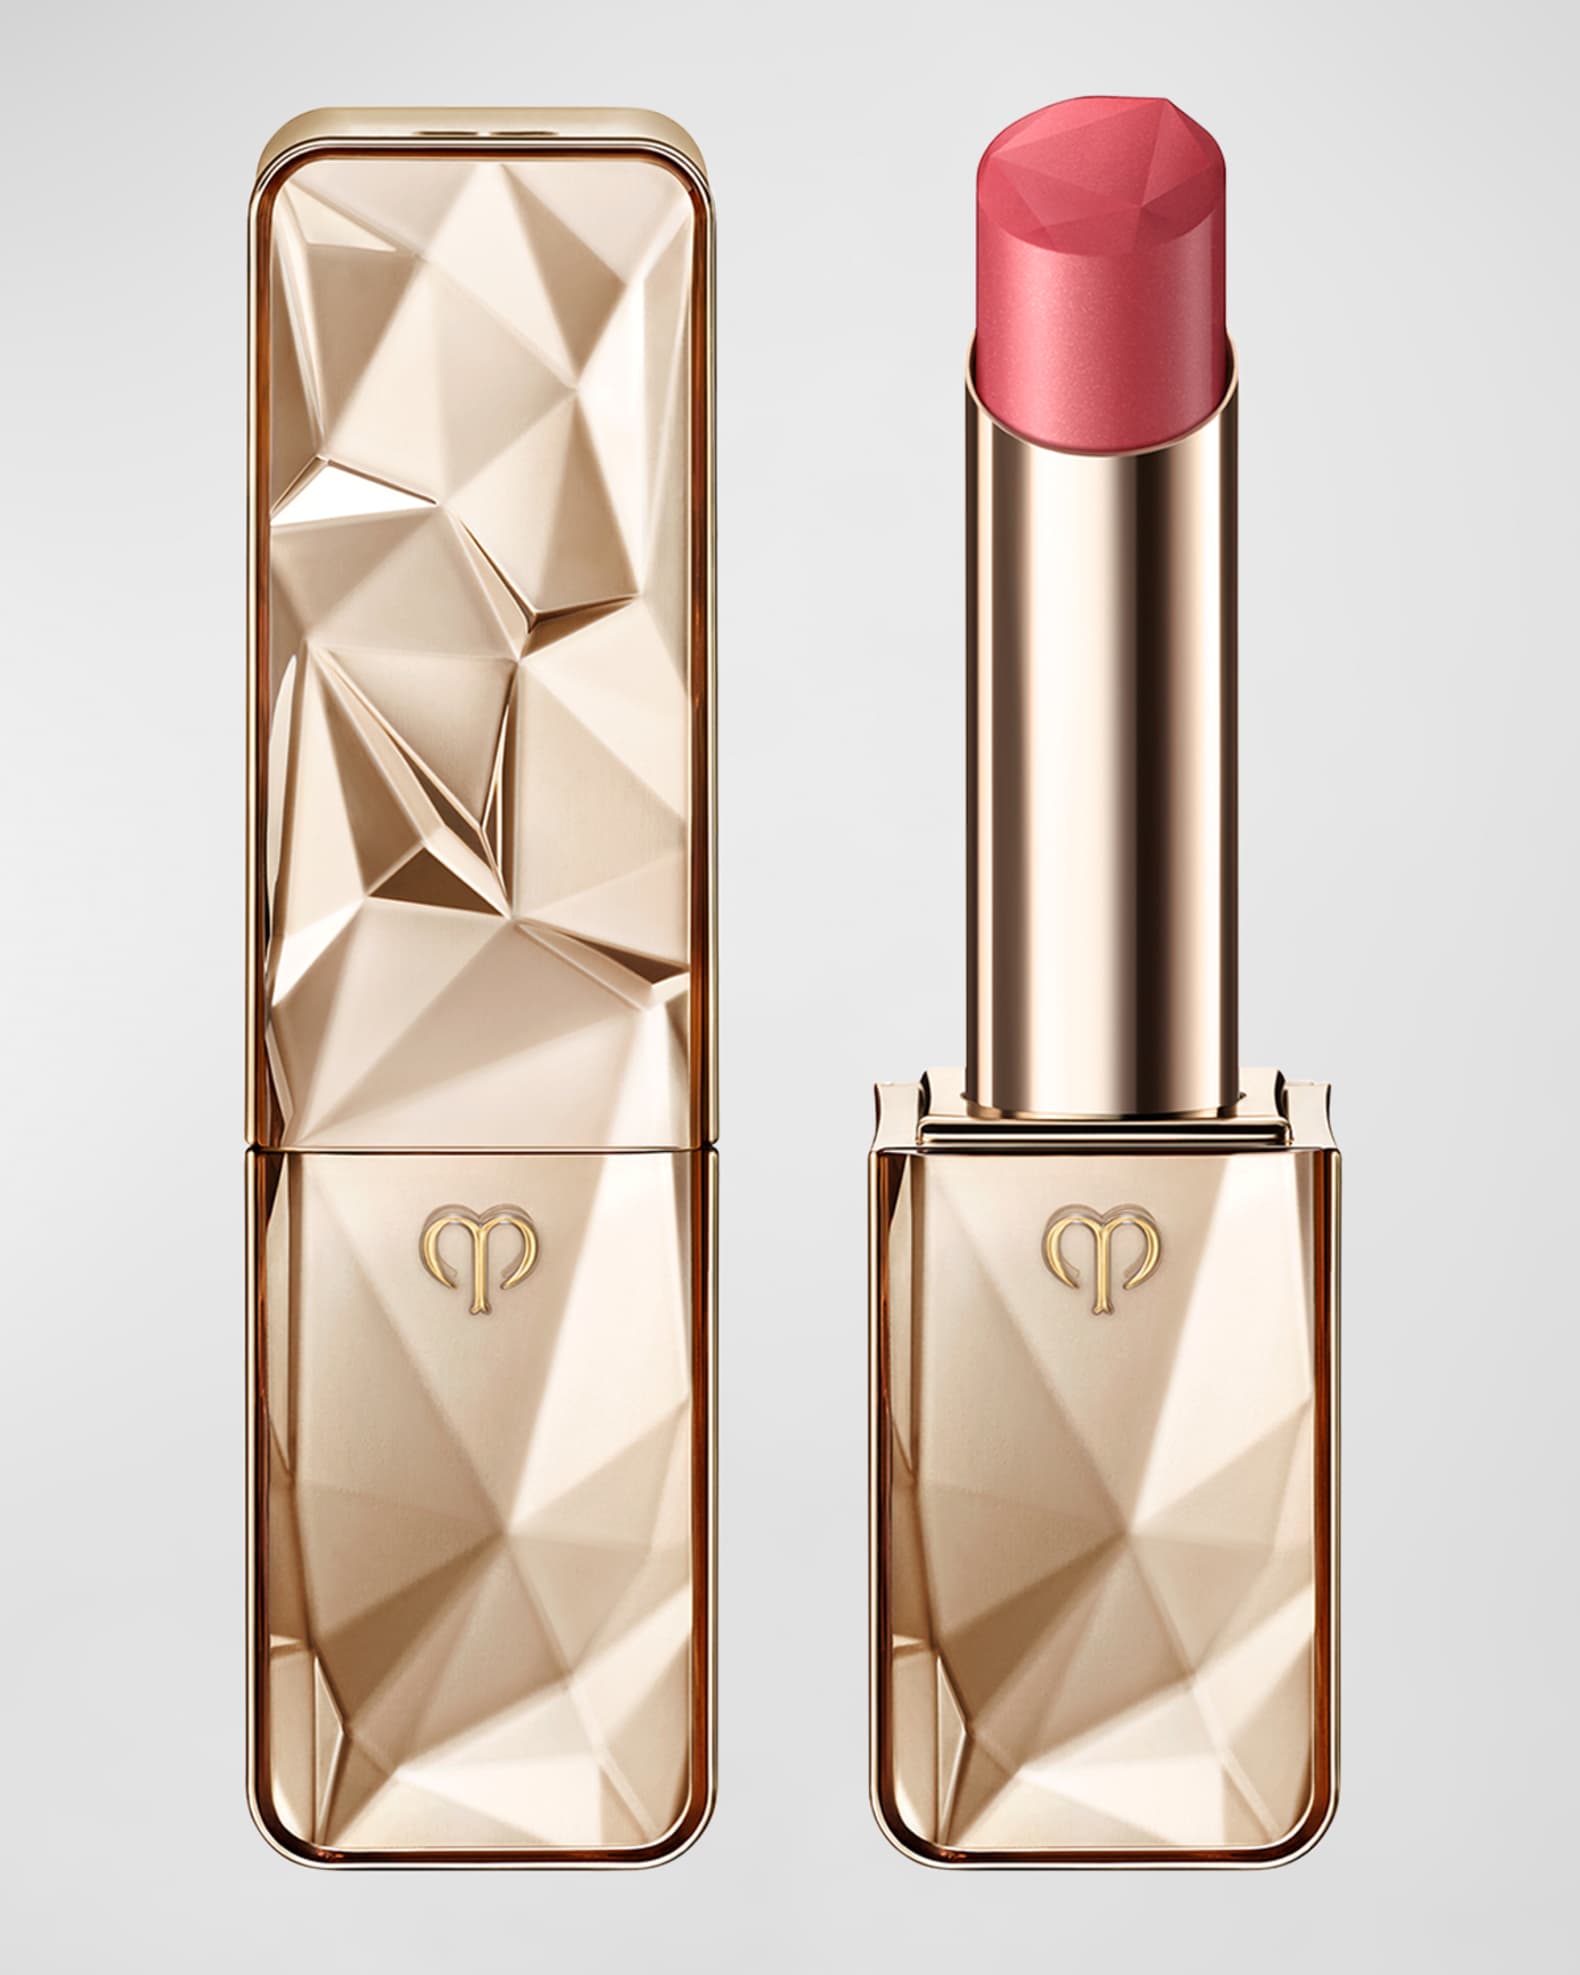 The Precious Lipstick | Neiman Marcus